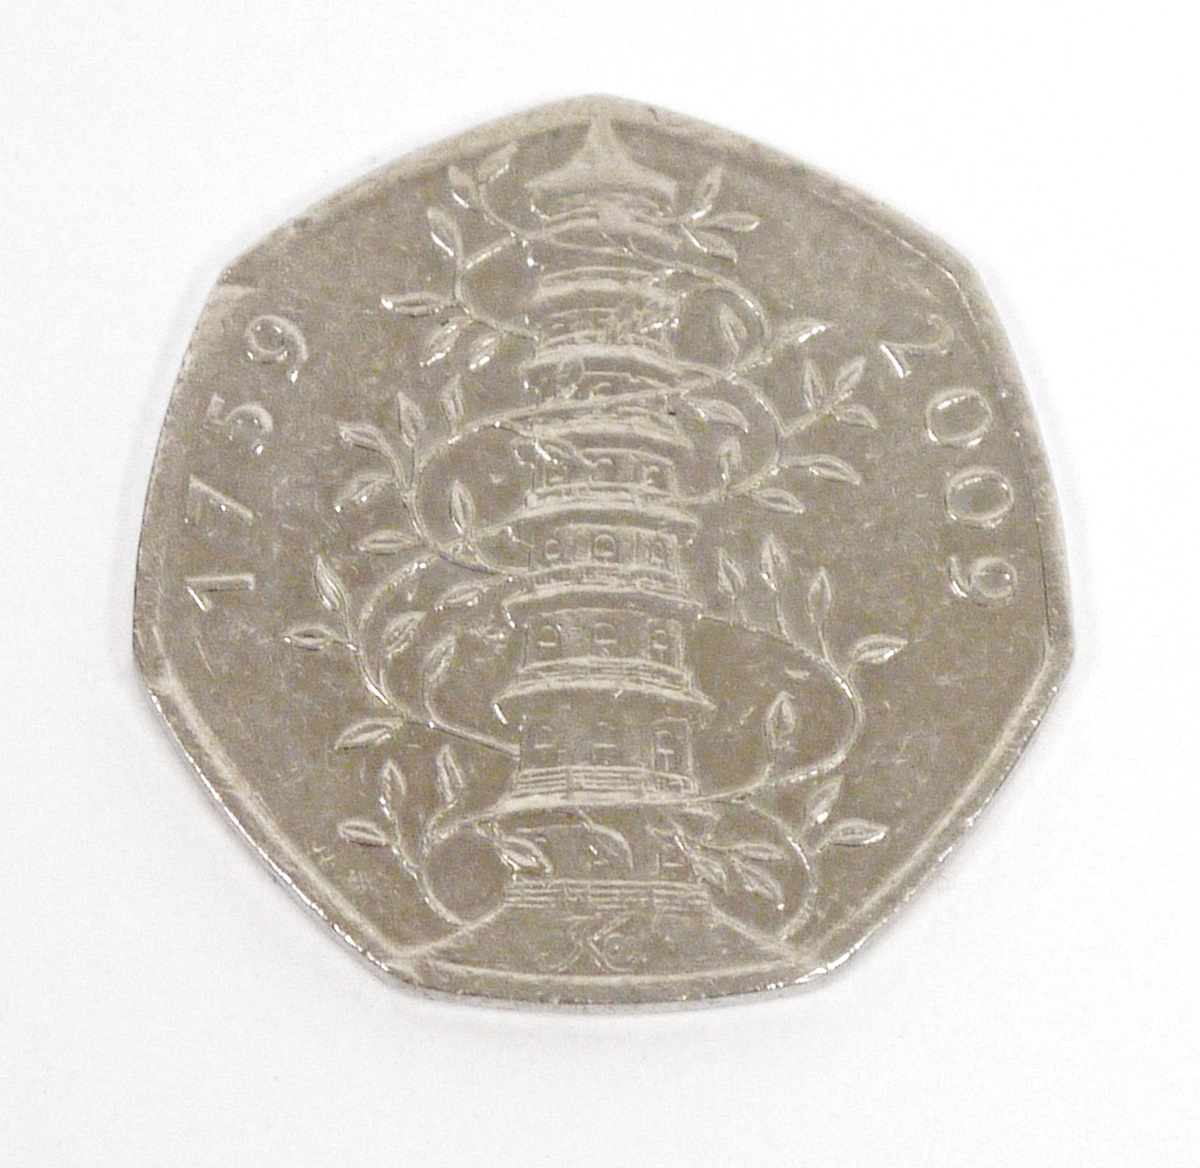 Elizabeth II 2009 Kew Gardens 50p coin, circulated